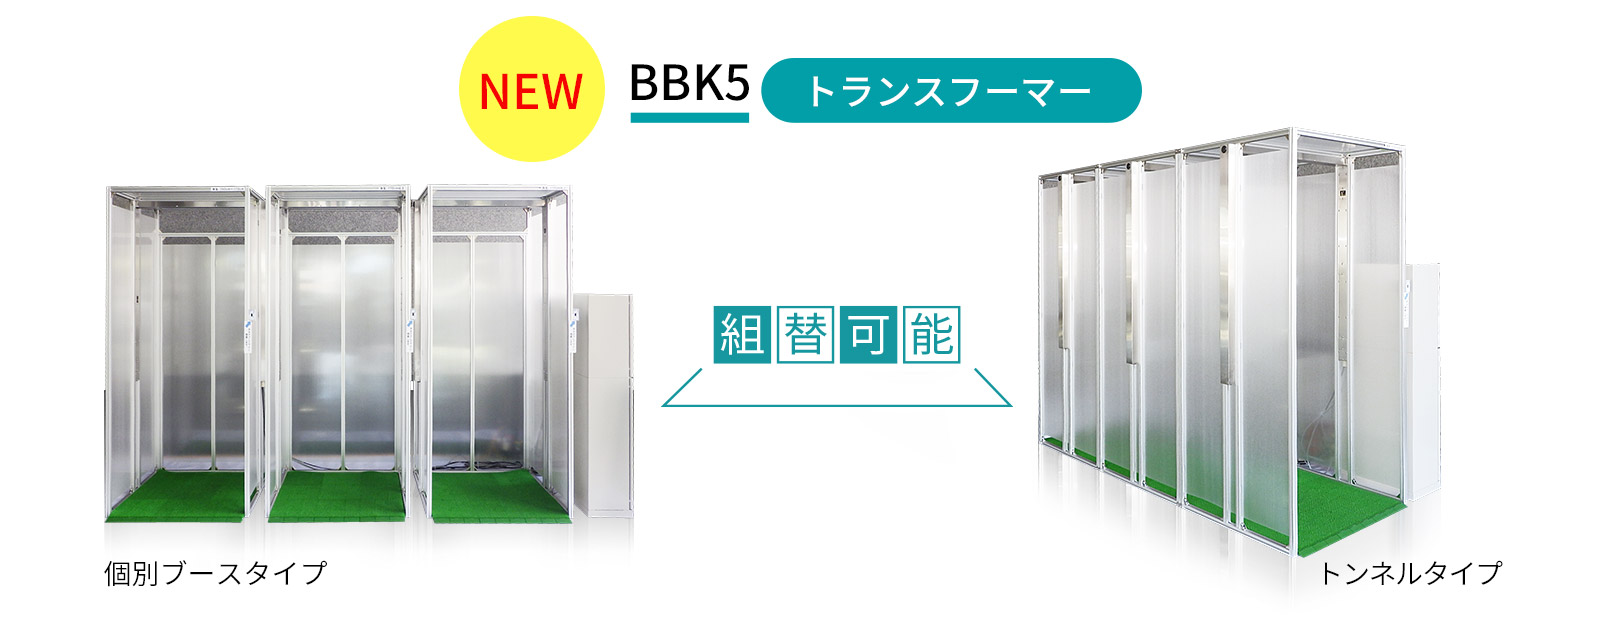 BBK5【トランスフーマー】